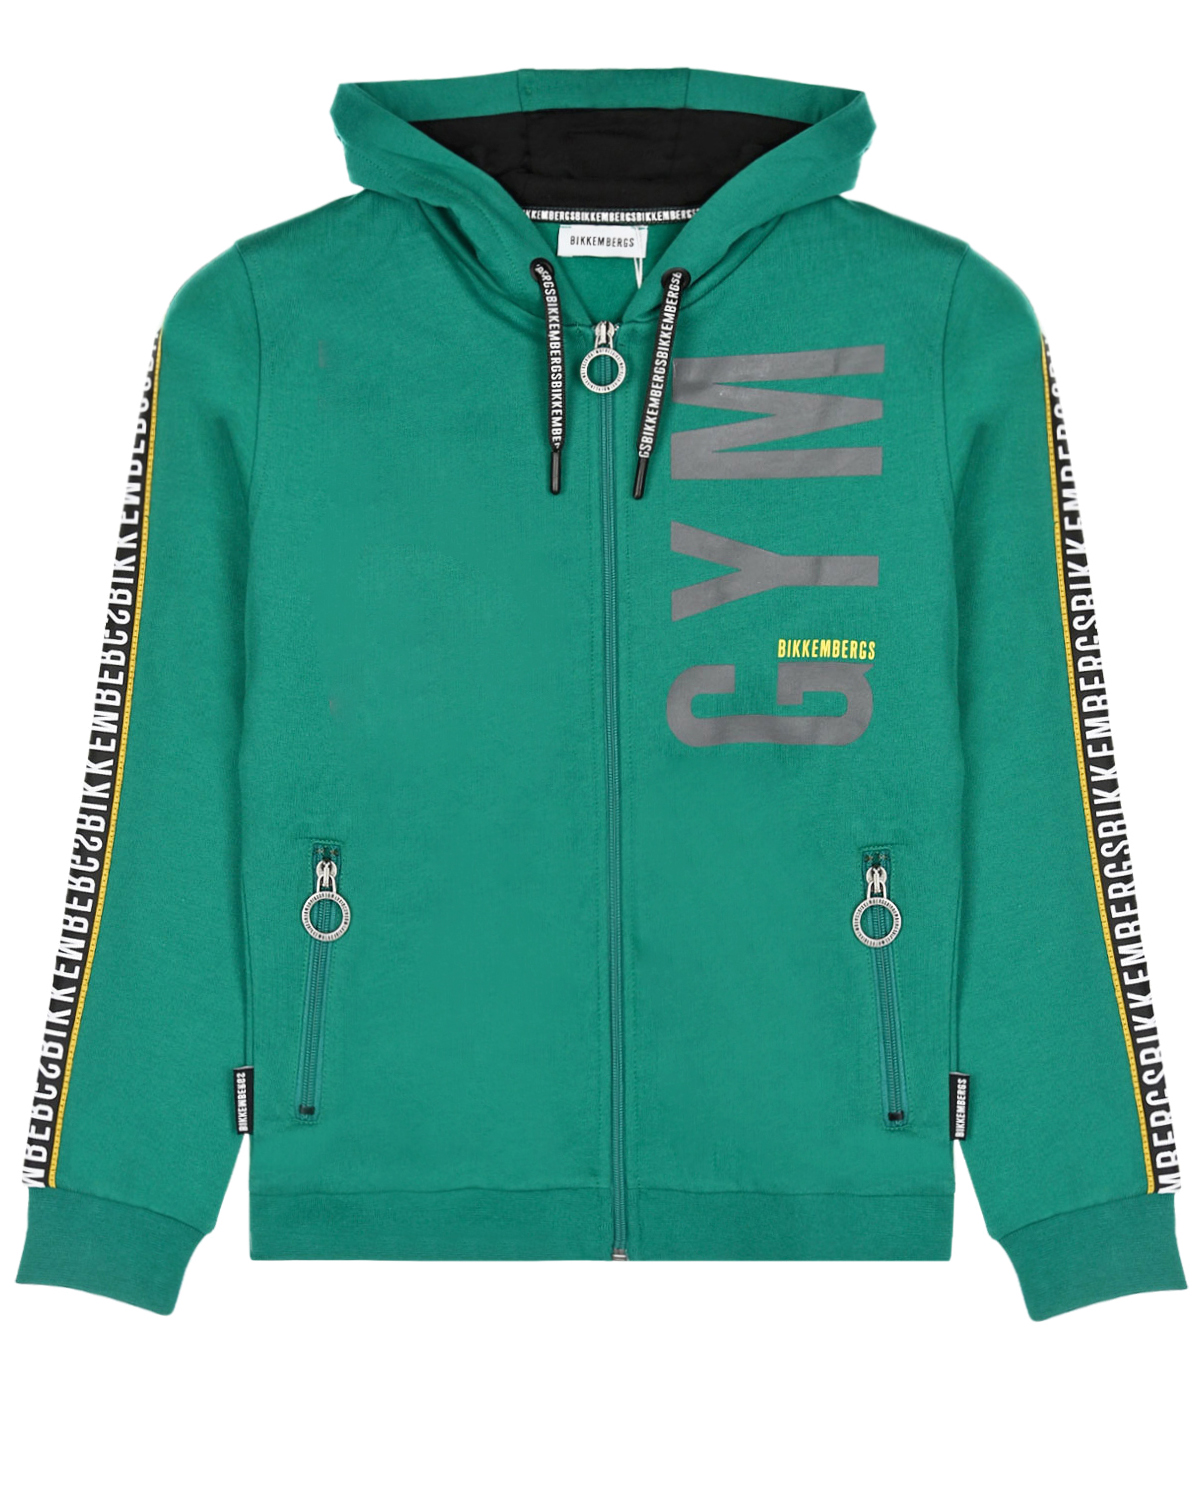 Зеленая спортивная куртка с лампасами Bikkembergs детская, размер 116, цвет зеленый - фото 1